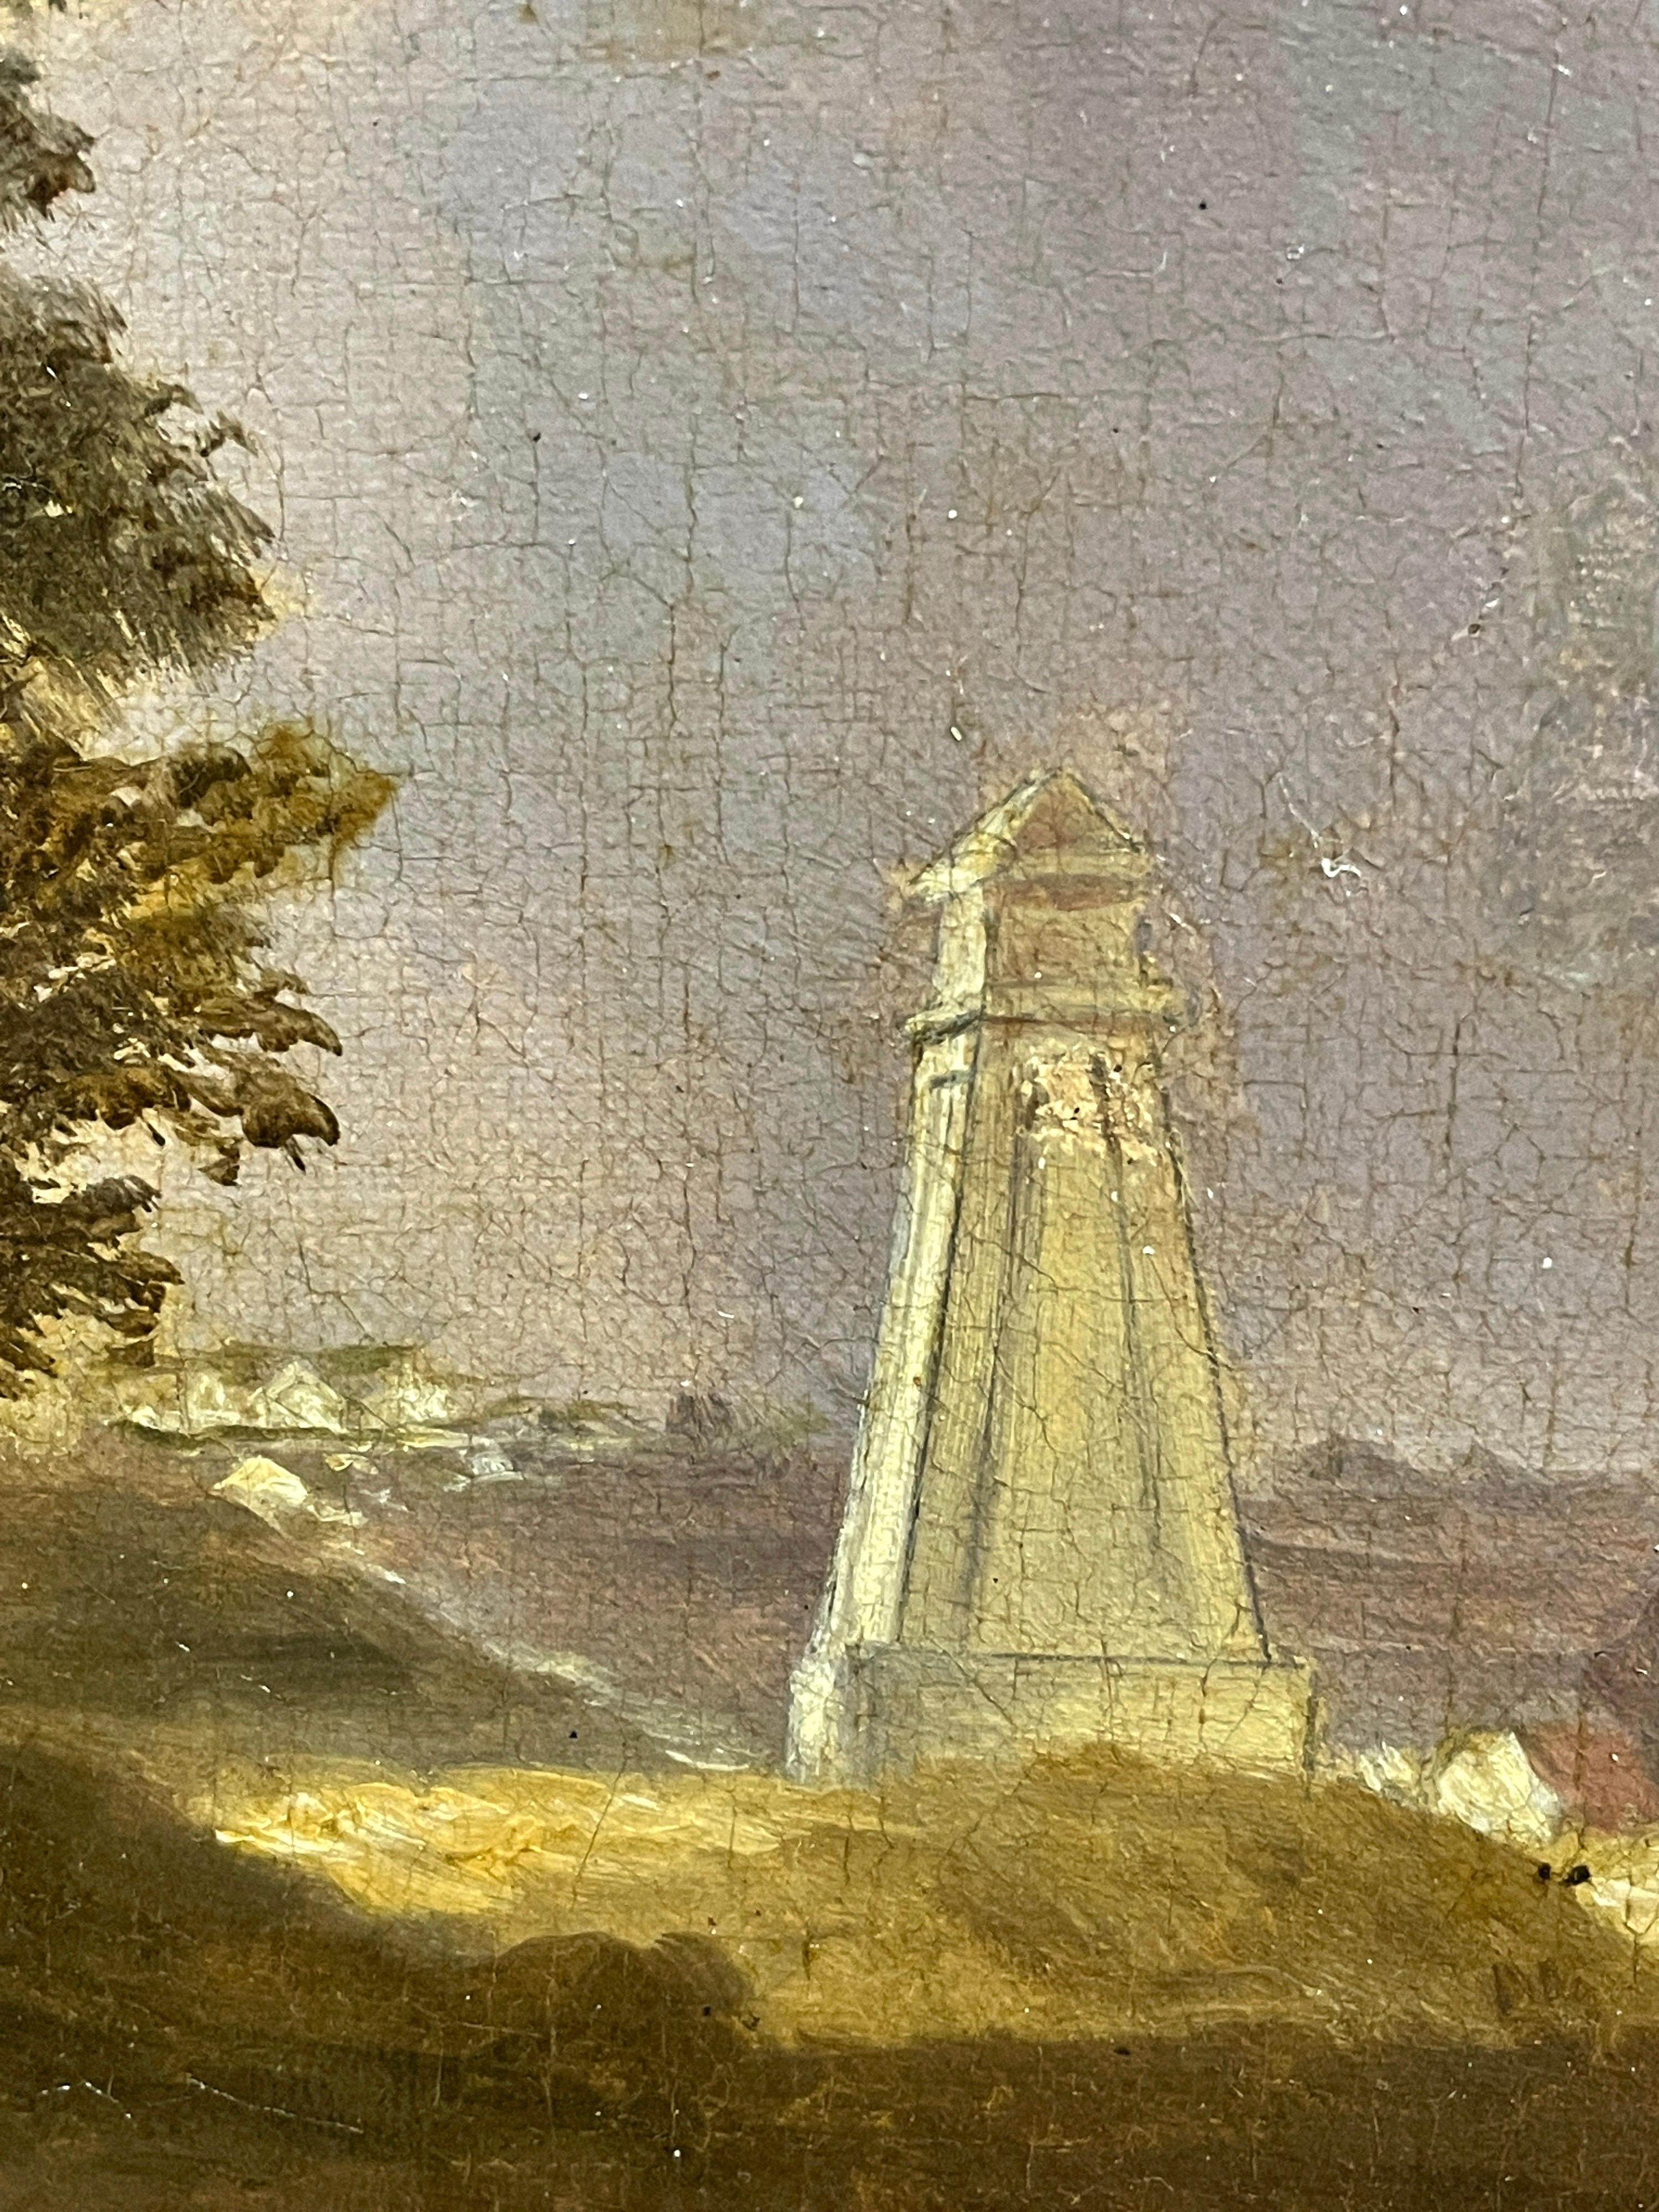 Waterloo Battlefield with 3 Monuments - Butte du Lion, Antique Oil Painting For Sale 6